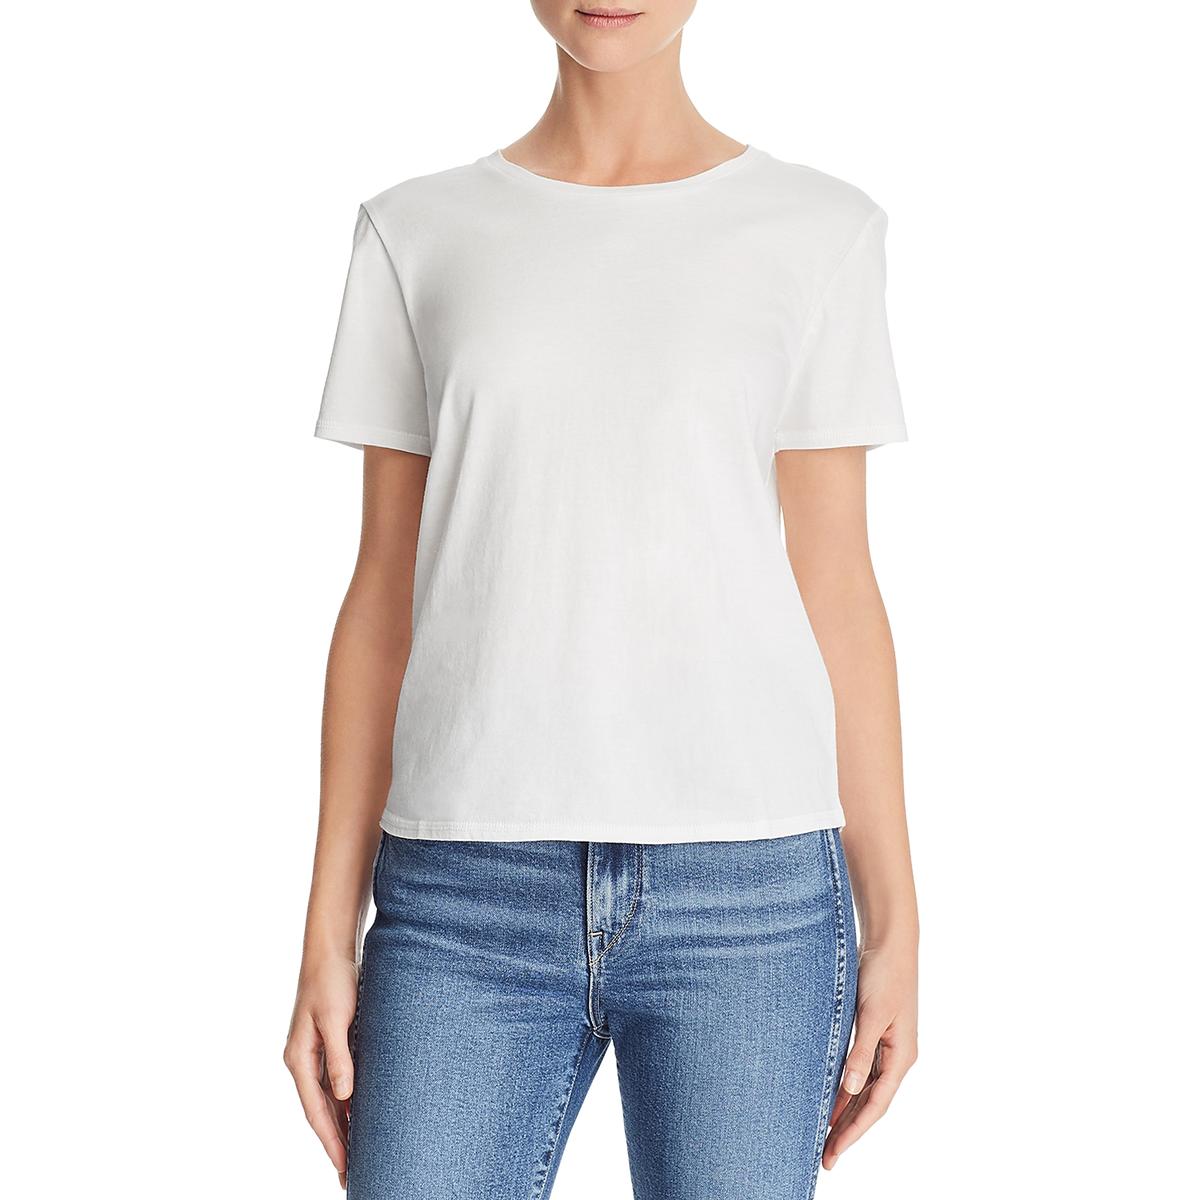 Comune Womens White Cotton Crewneck Tee T-Shirt Top XS BHFO 4409 | eBay